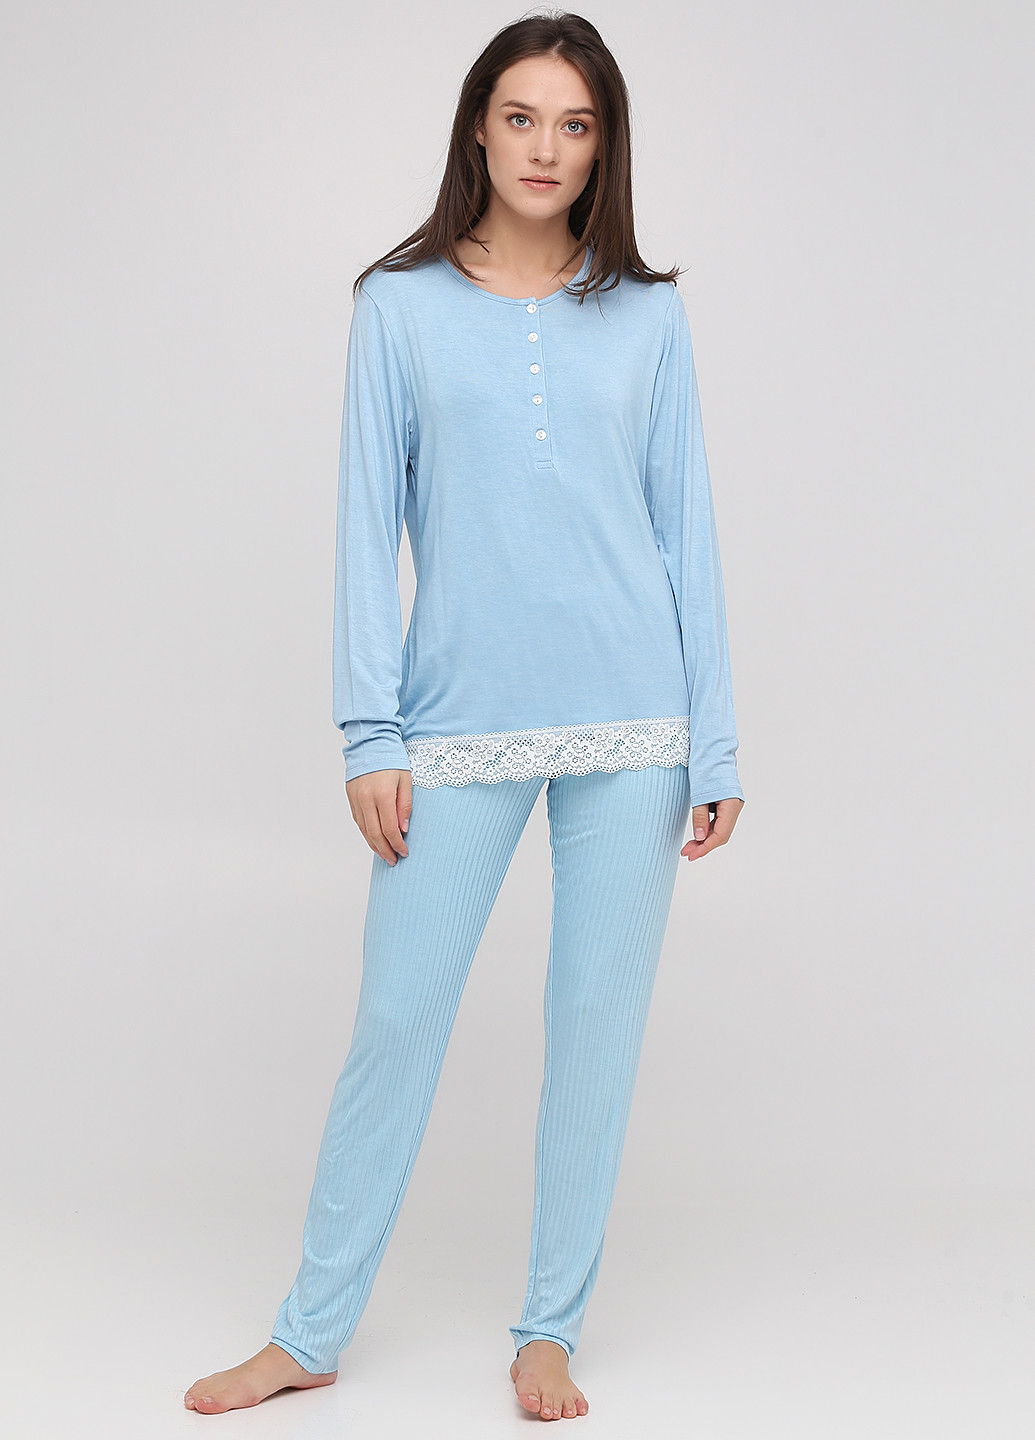 Голубая всесезон пижама (лонгслив, брюки) лонгслив + брюки SieLei